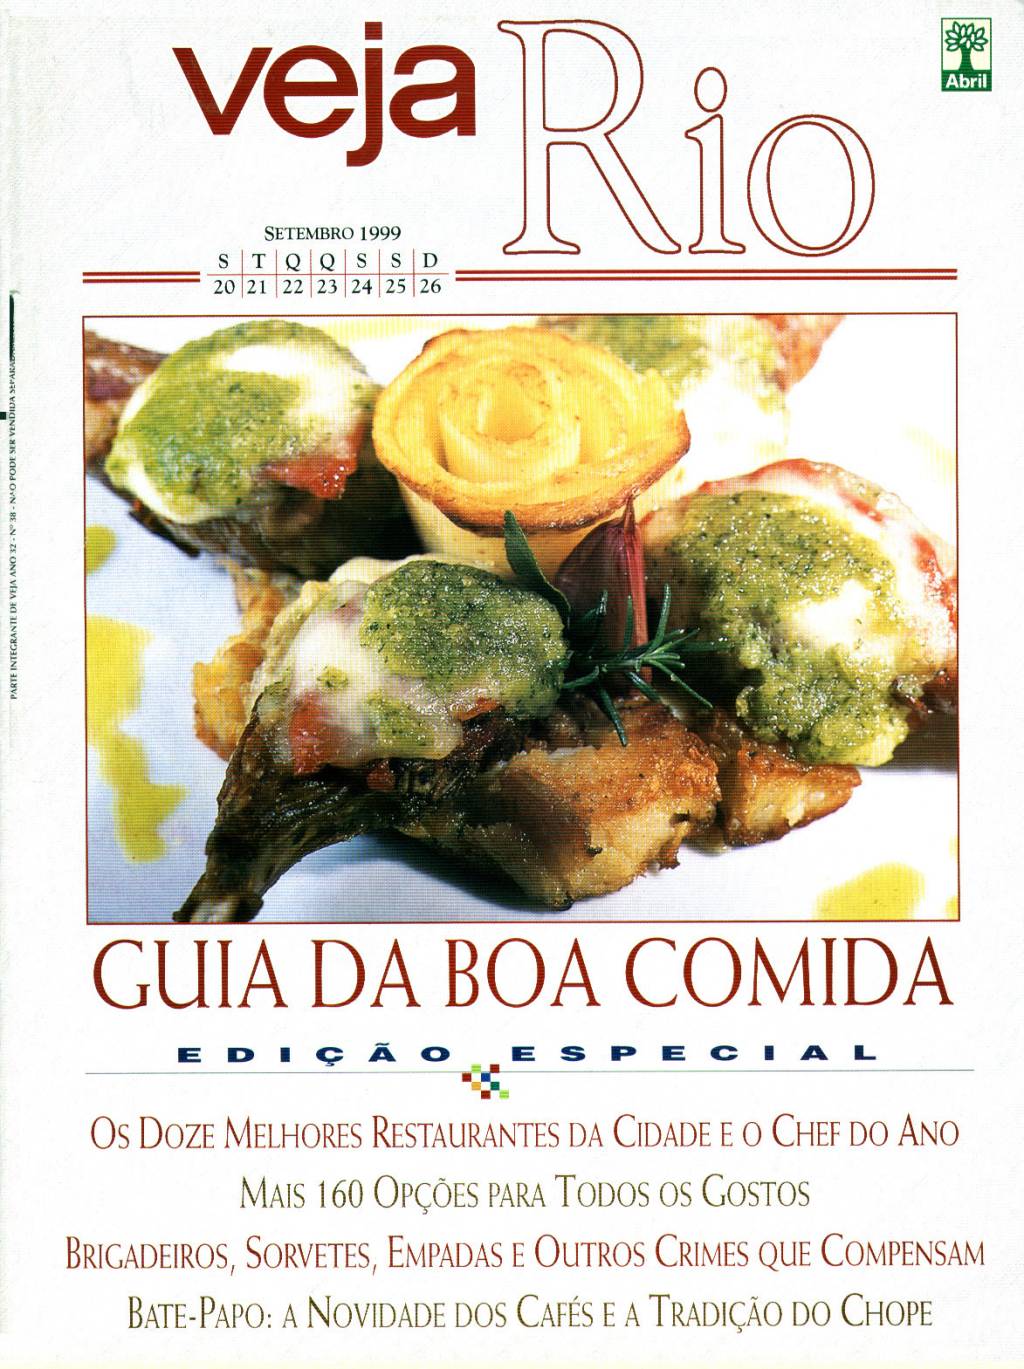 Capa da revista Veja Rio Especial Guia da Boa Comida, de 22 de setembro de 1999